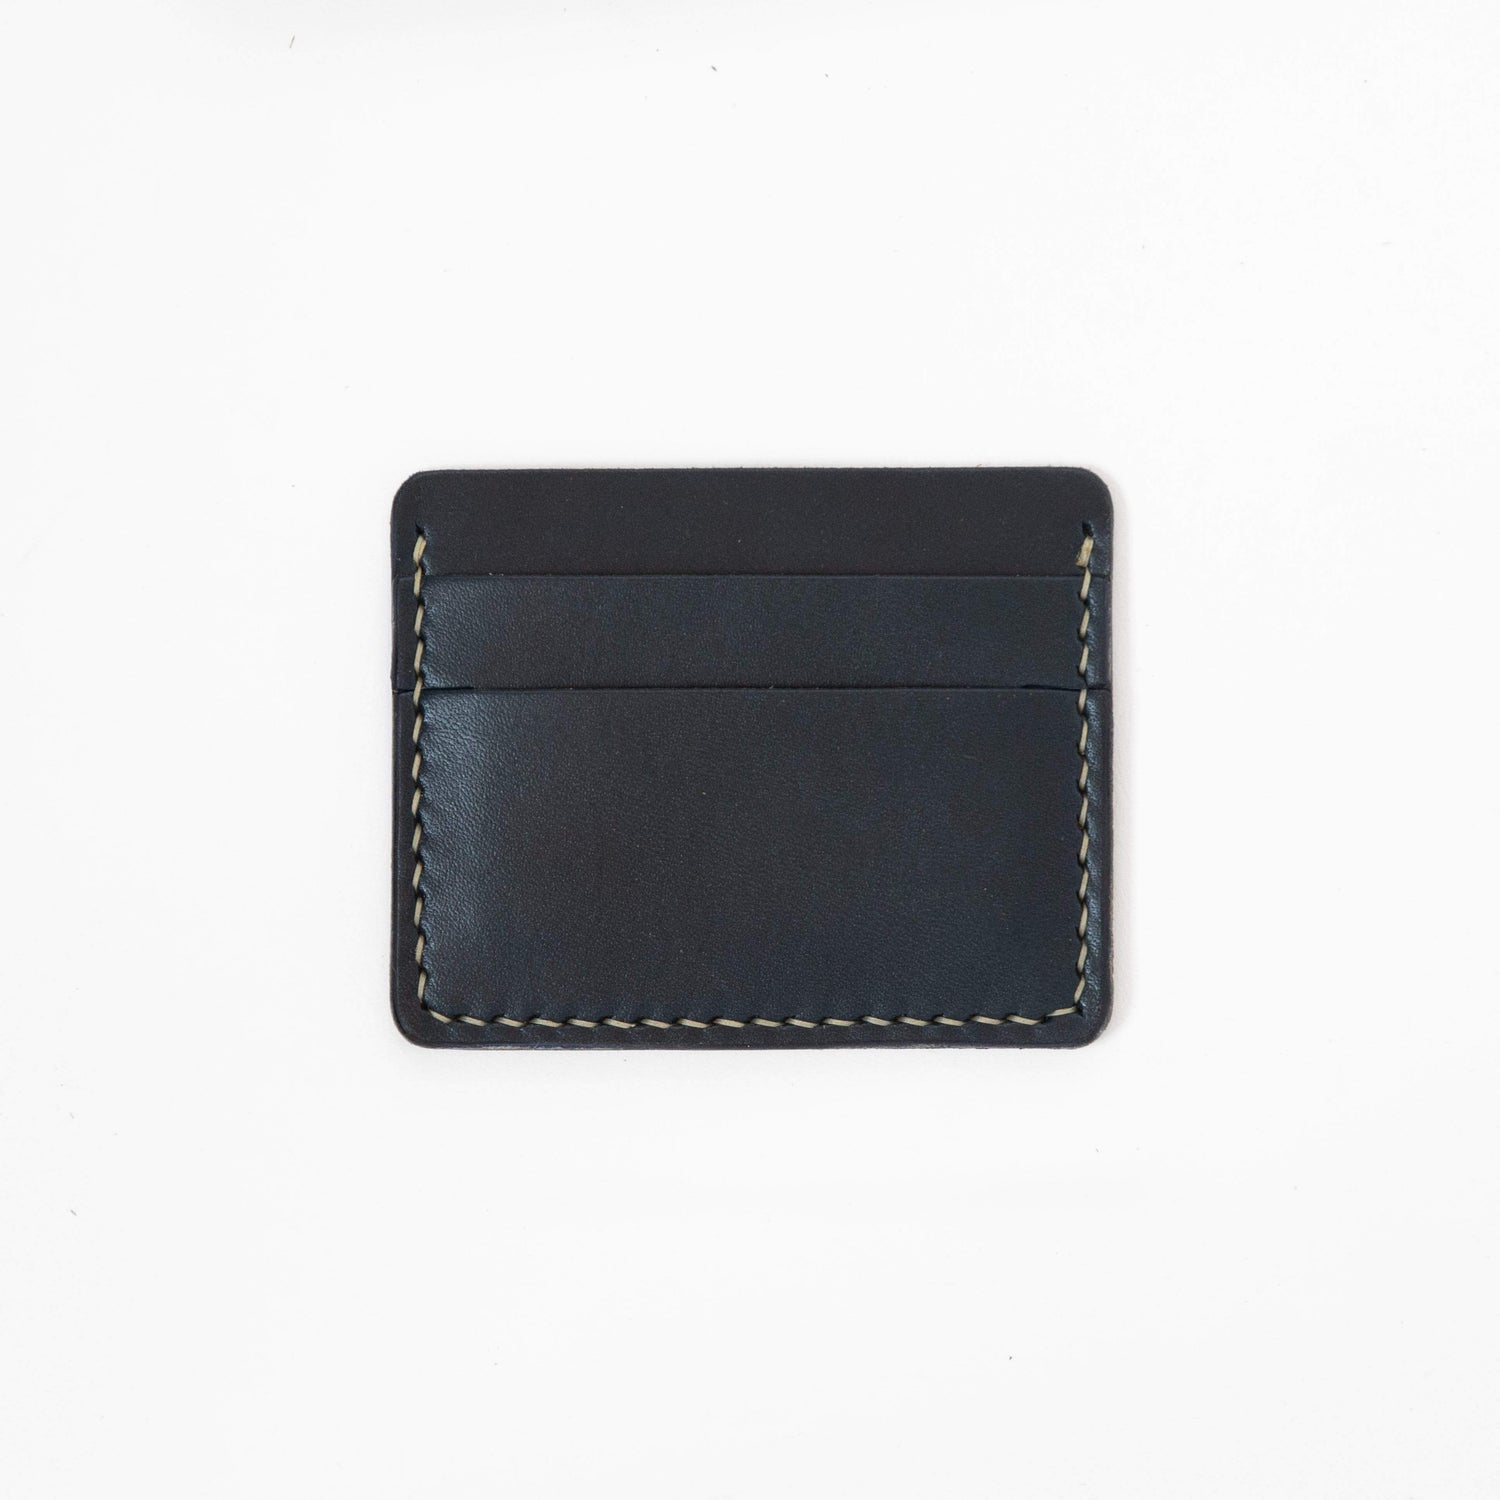 RFID Wallet for Men, Navy Bridle, Billfold